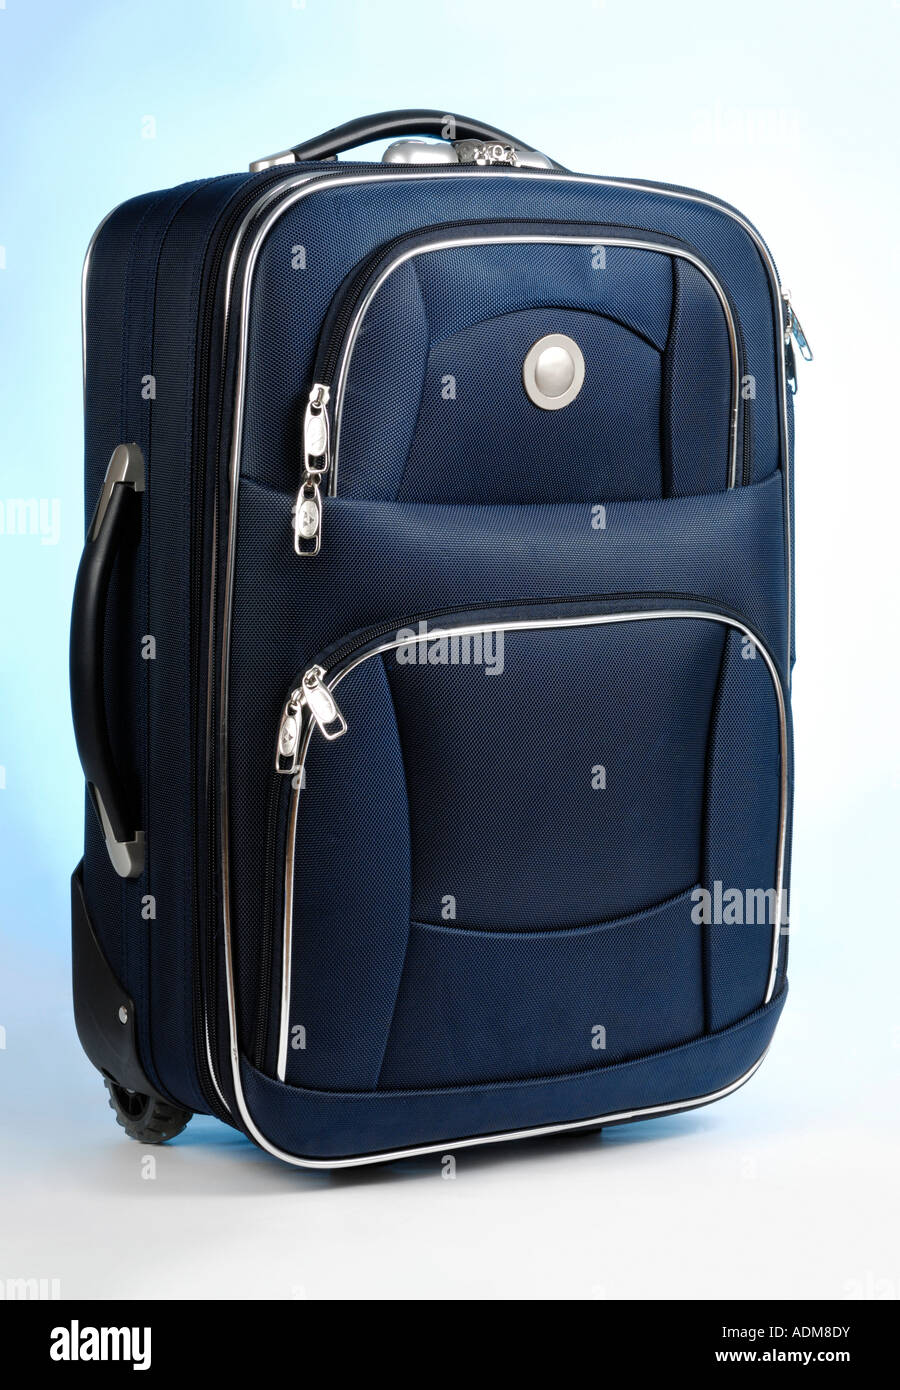 Maleta de viaje azul bolsa de equipaje Equipaje recorte aislado caso Foto de stock